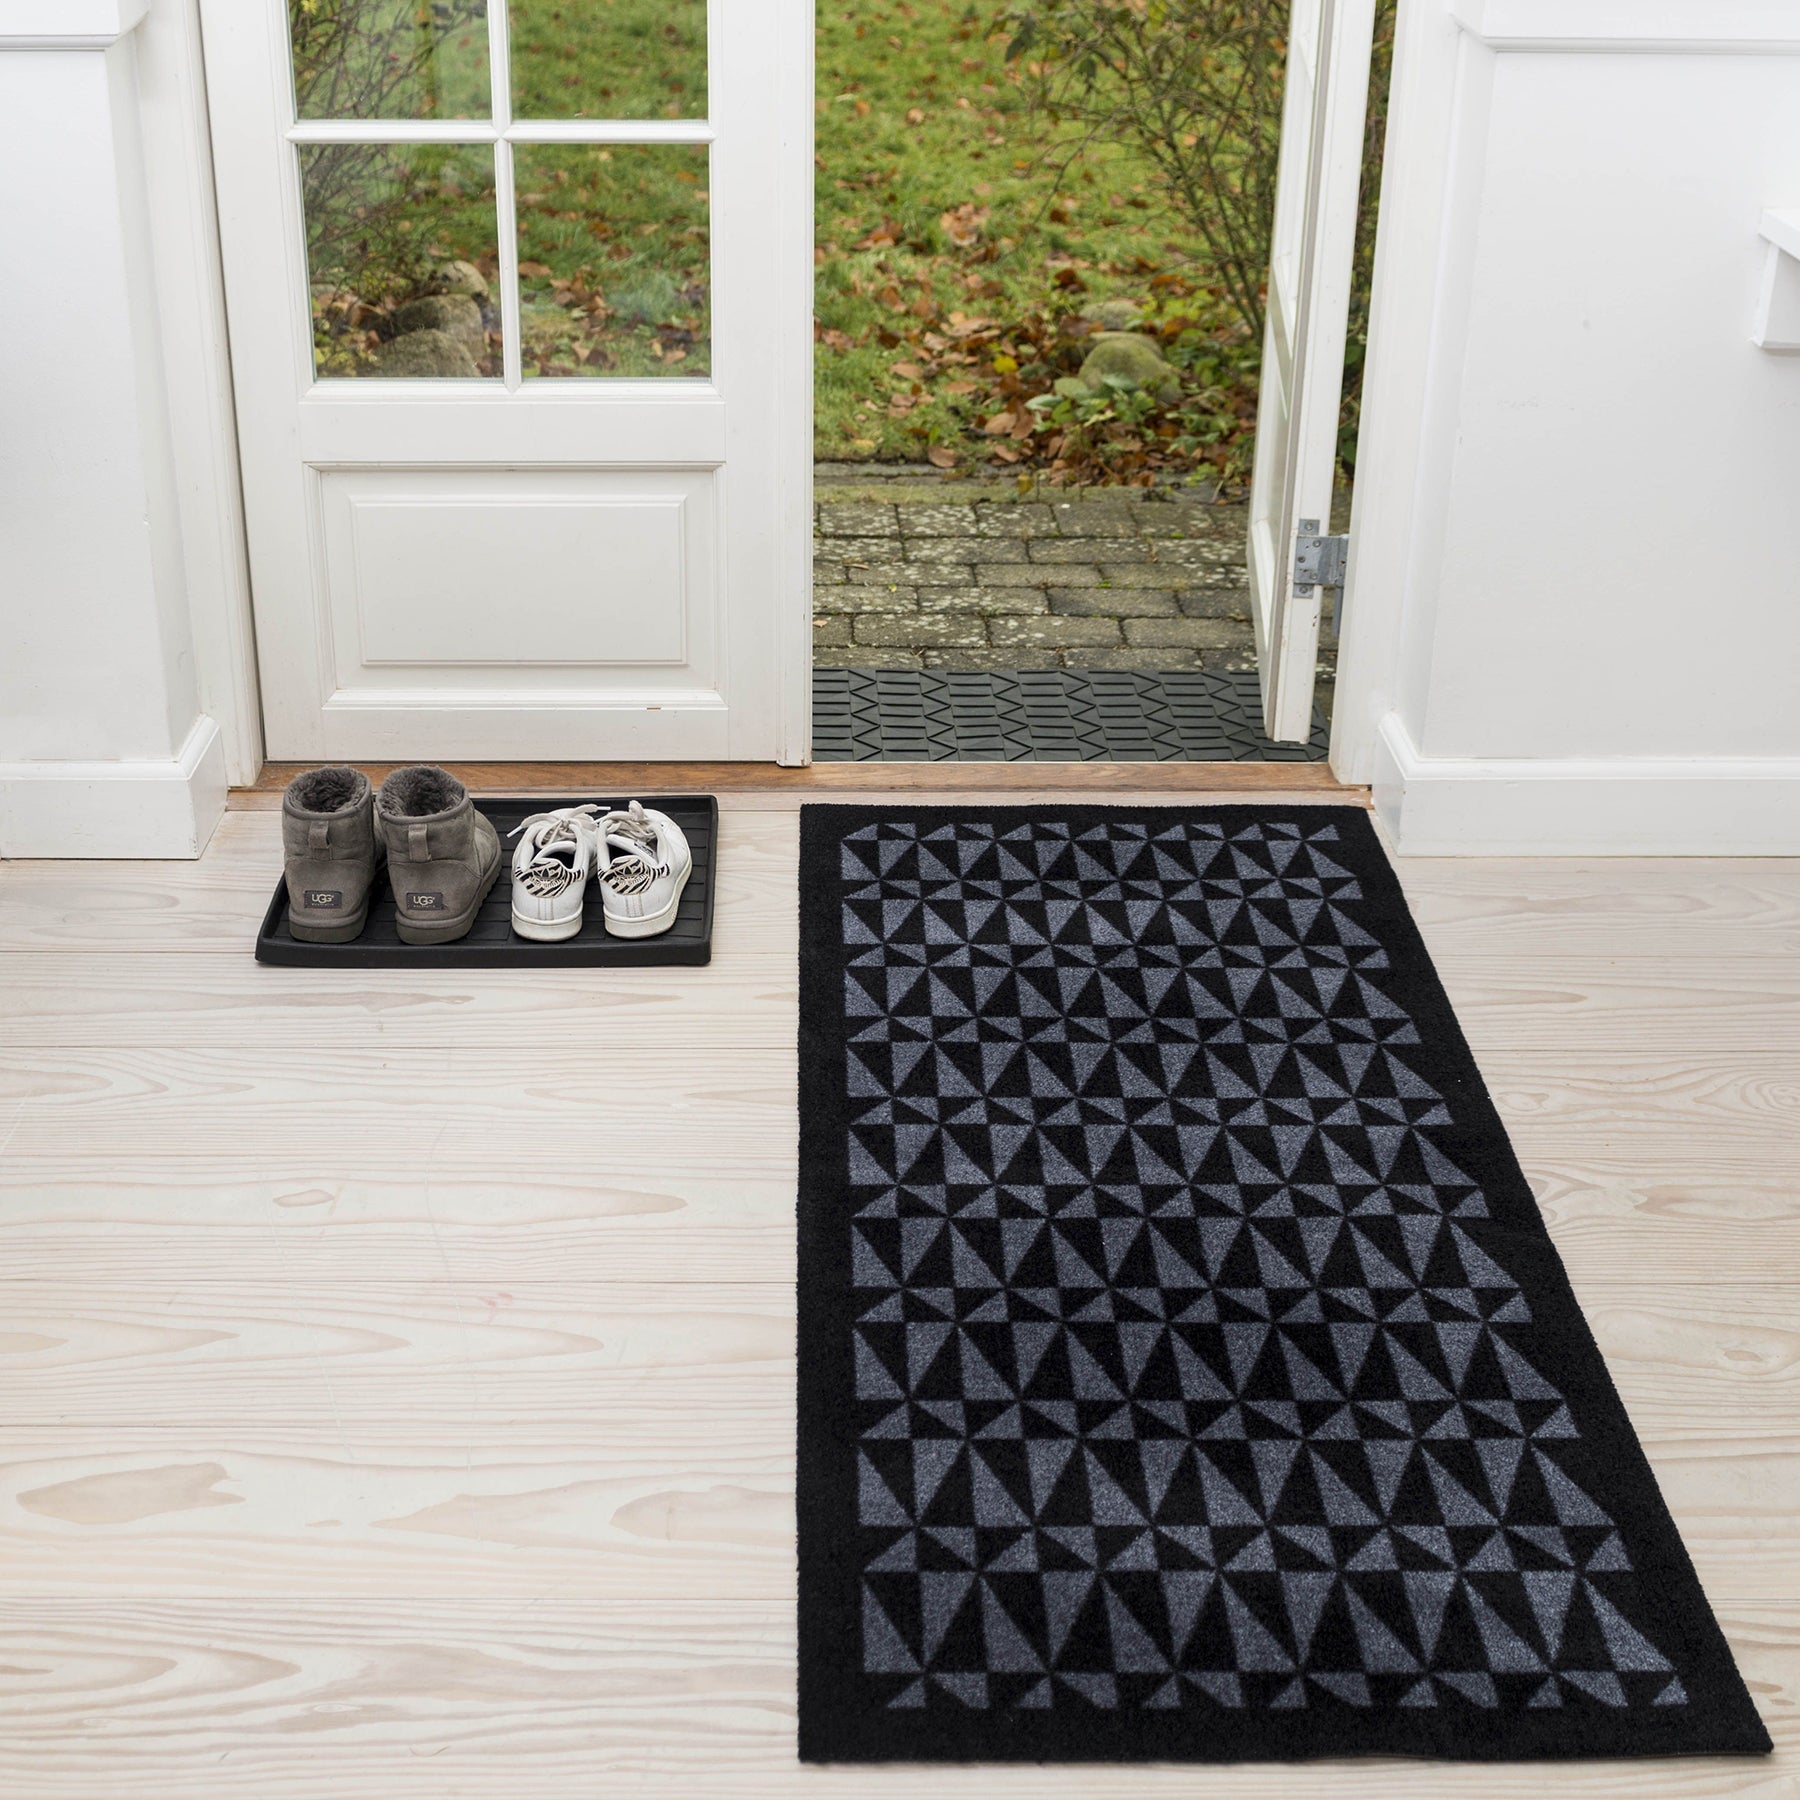 Floor mat 67 x 150 cm - Graphic/Black Gray